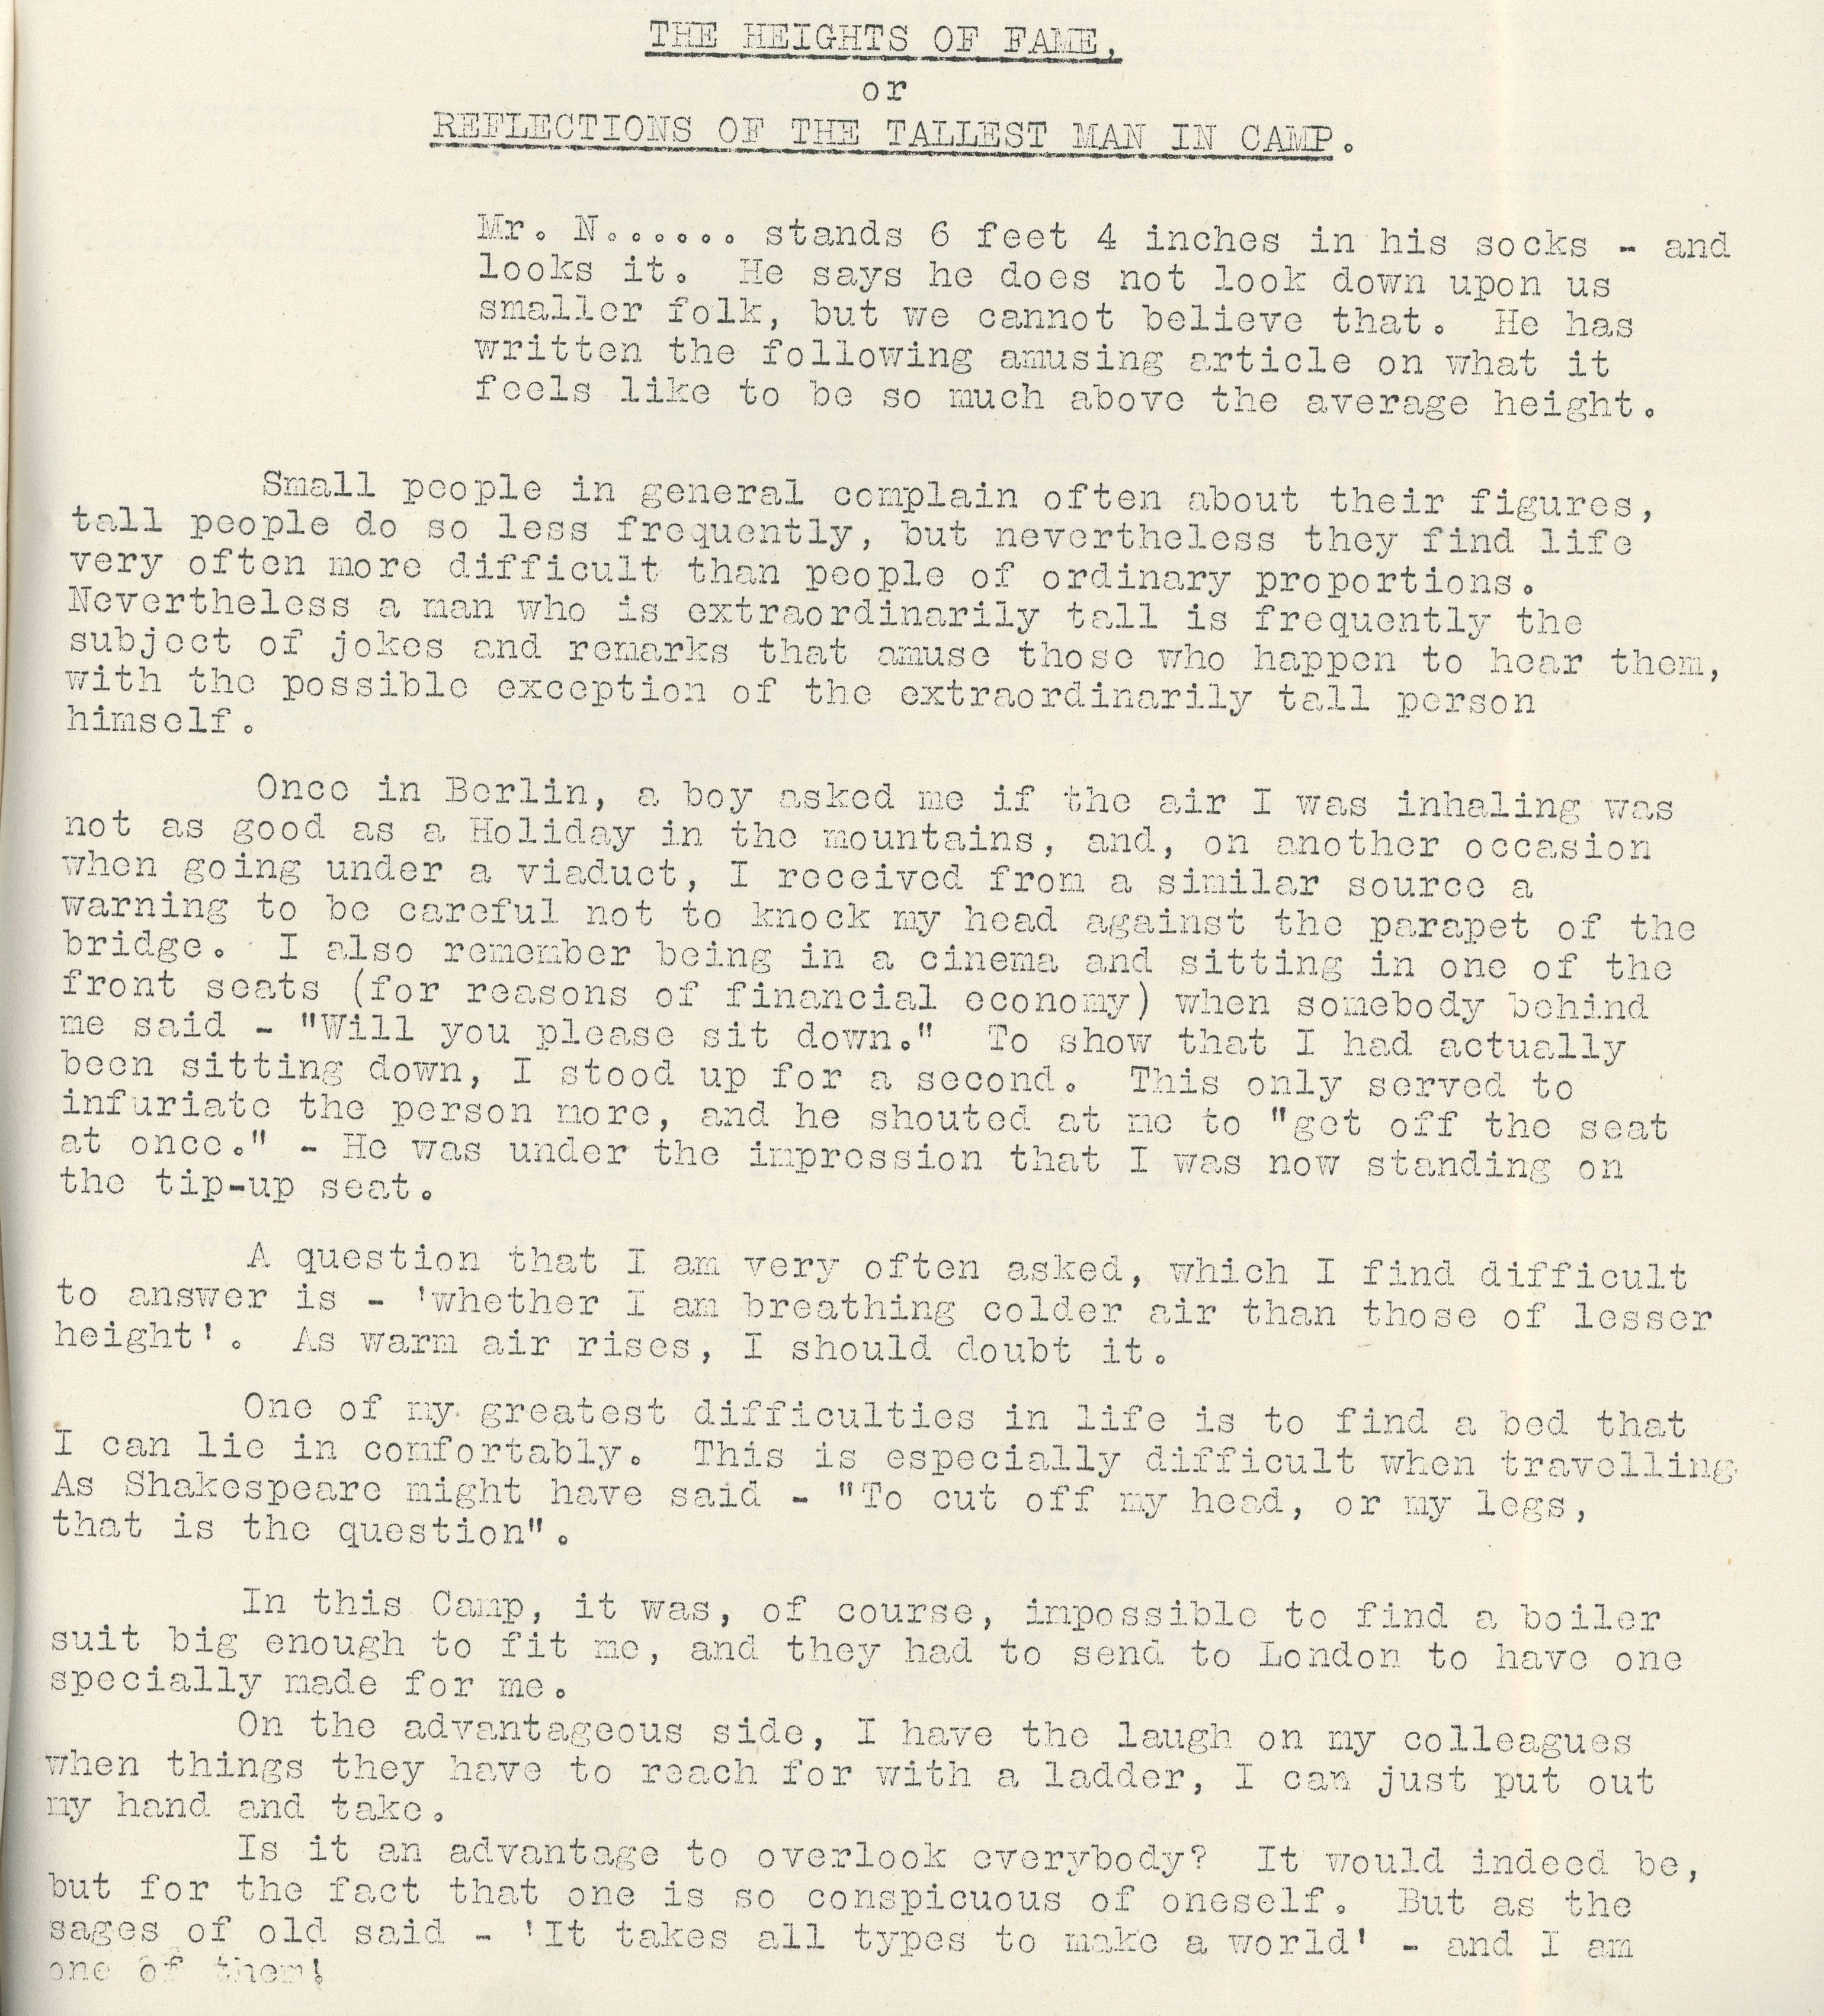 Kitchener Camp Review, April 1939, page 8, base